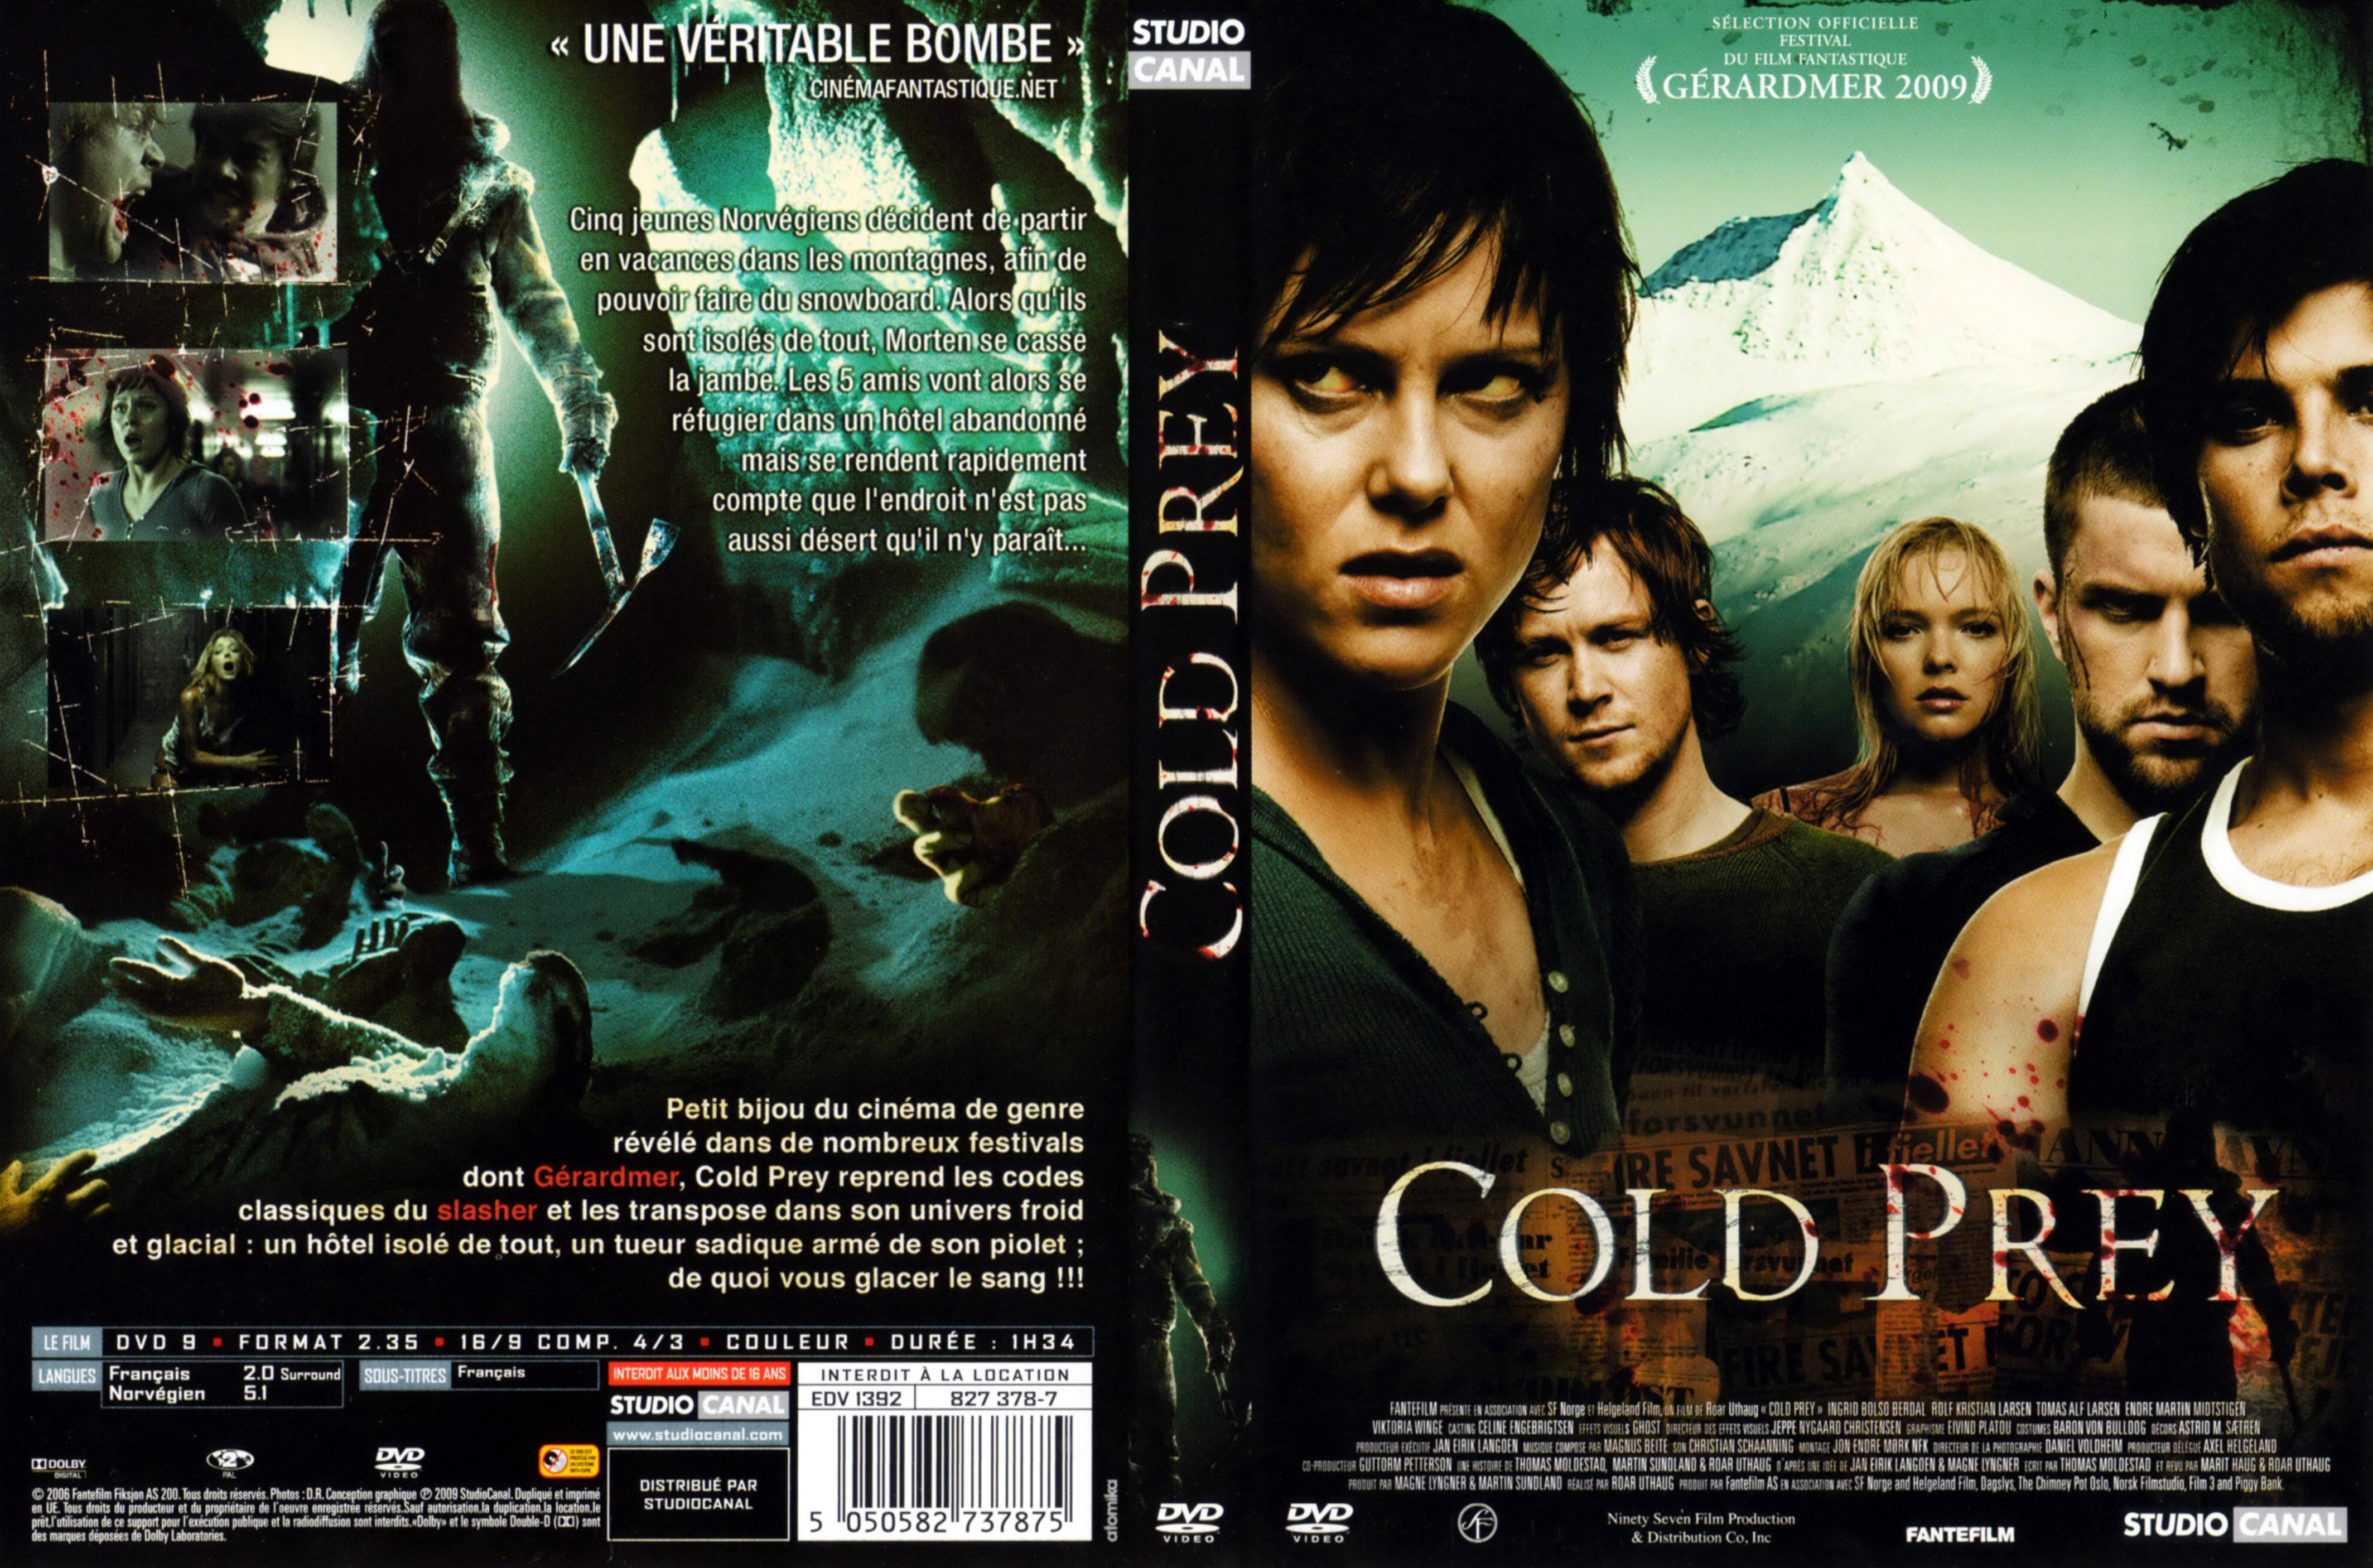 Jaquette DVD Cold prey